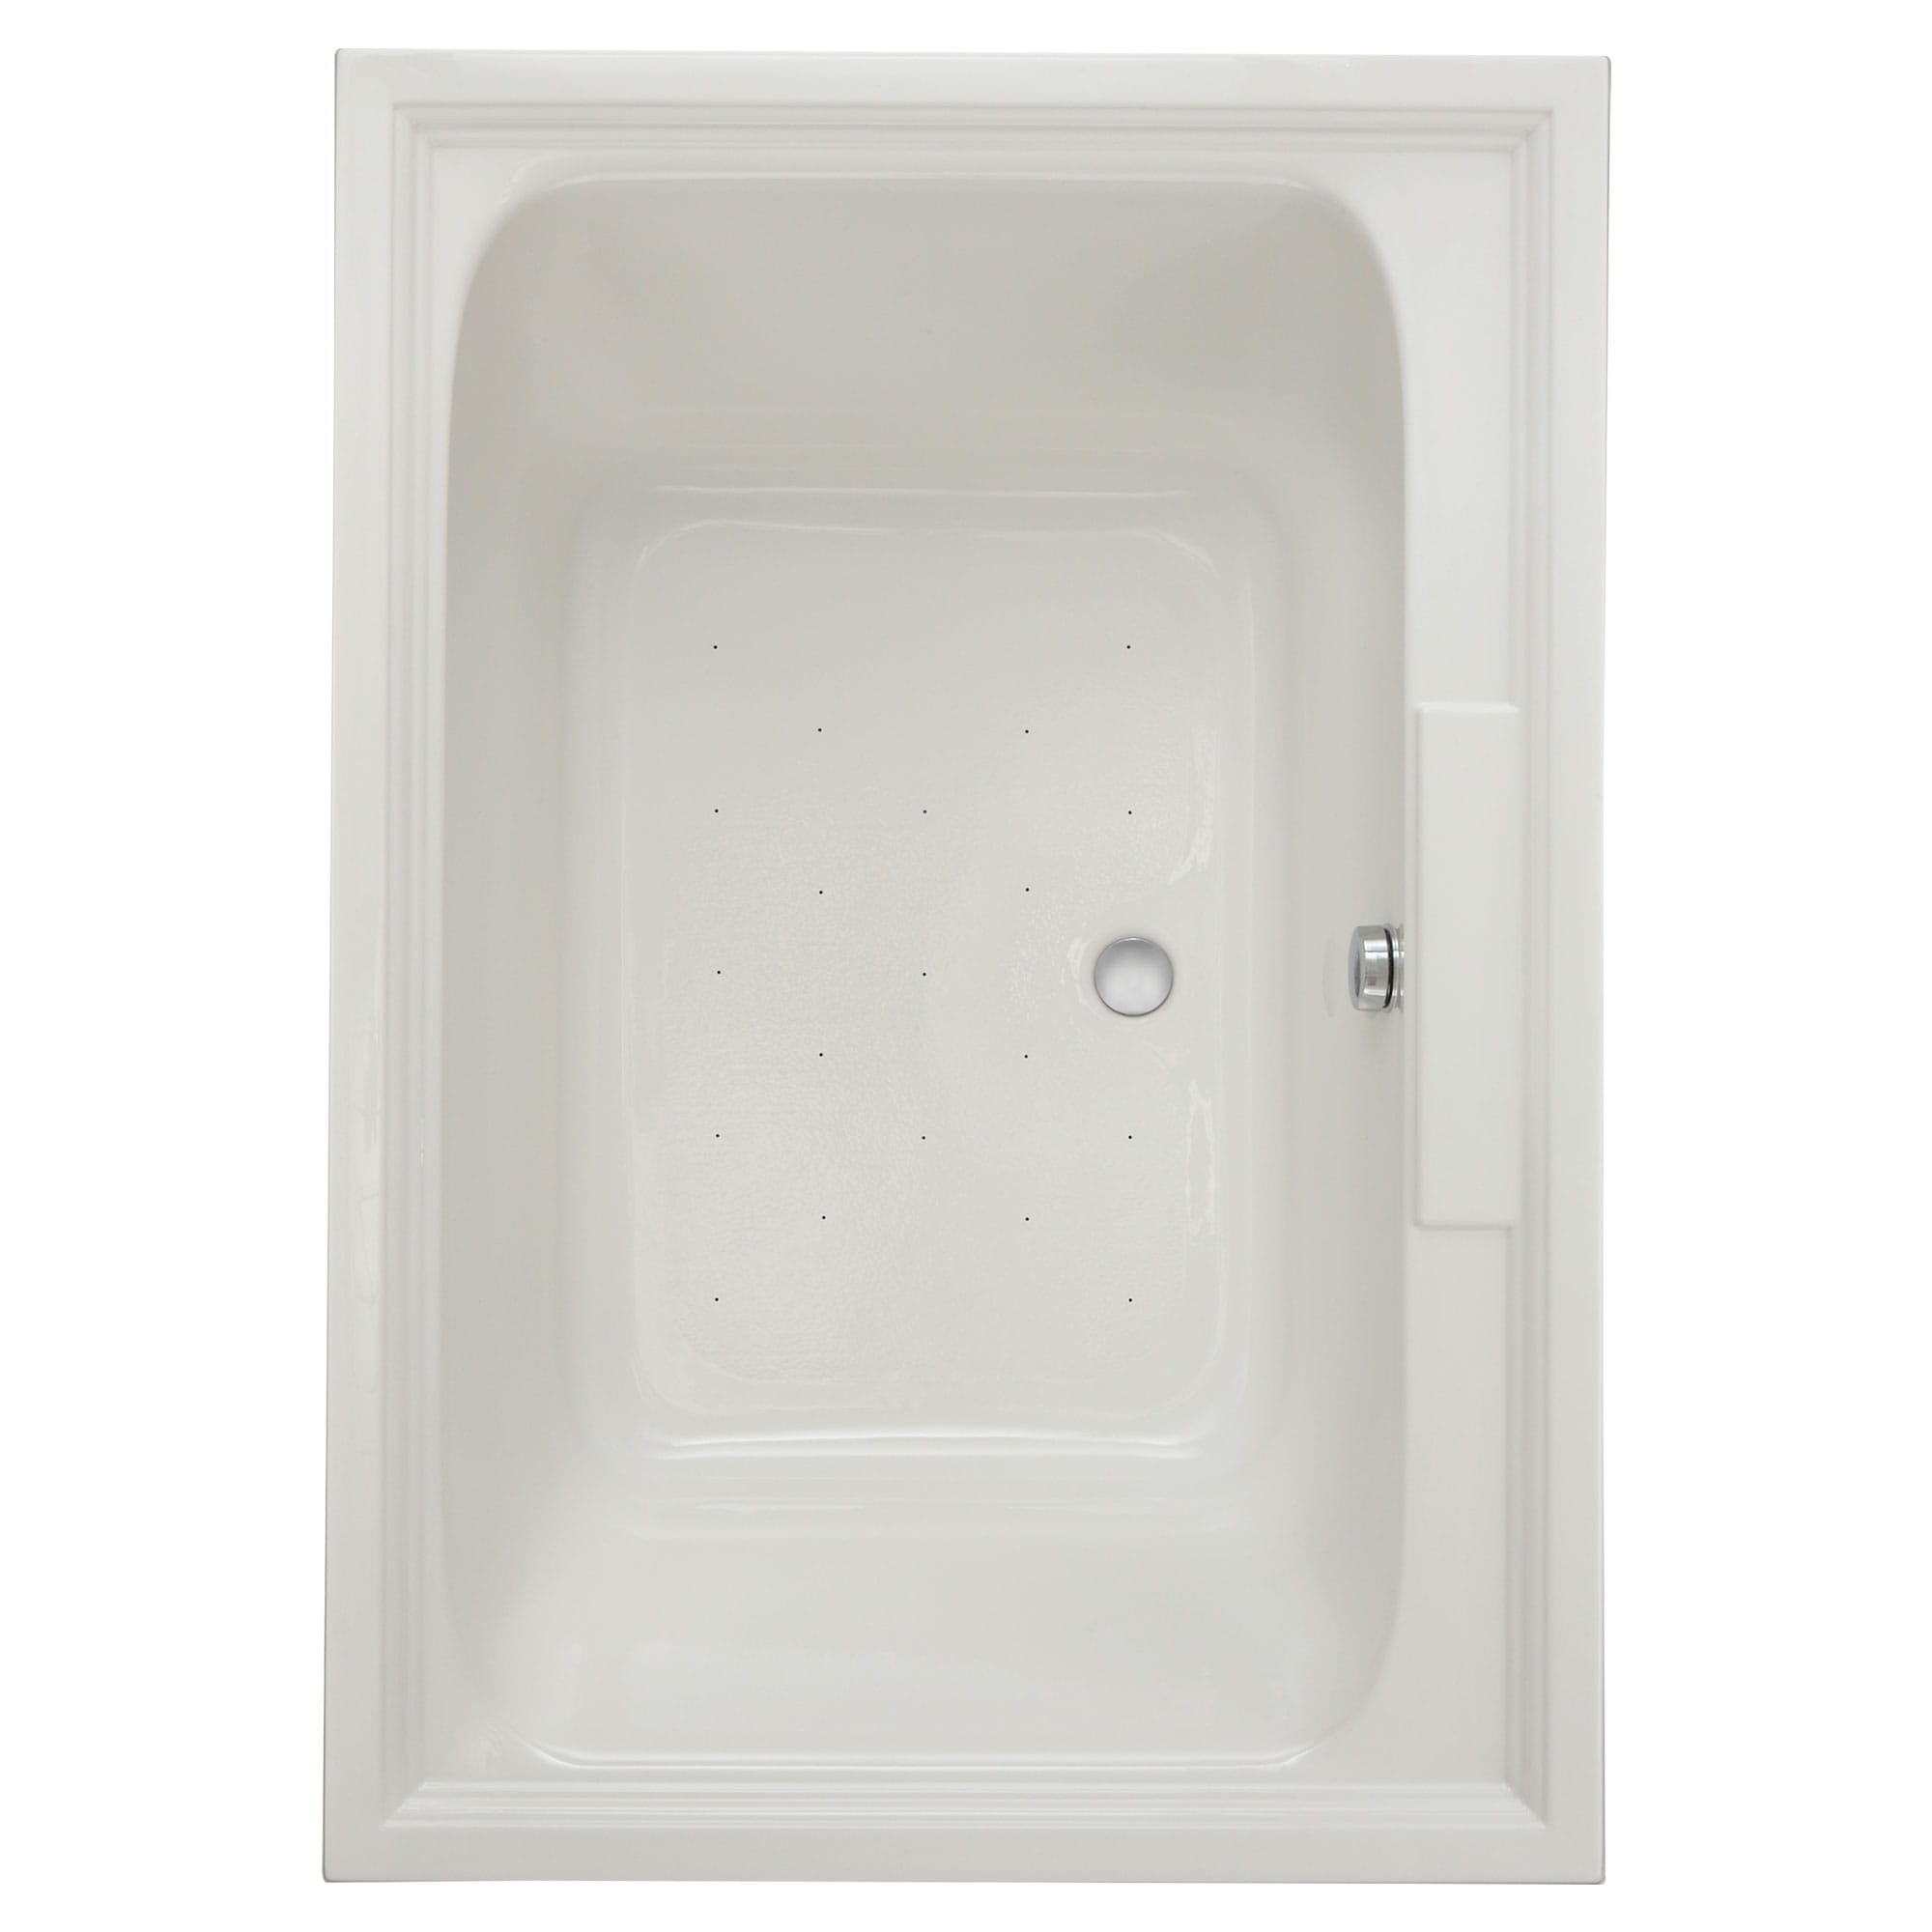 Town Square 60 x 42 Inch Drop In Bathtub With EverClean Air Bath System WHITE